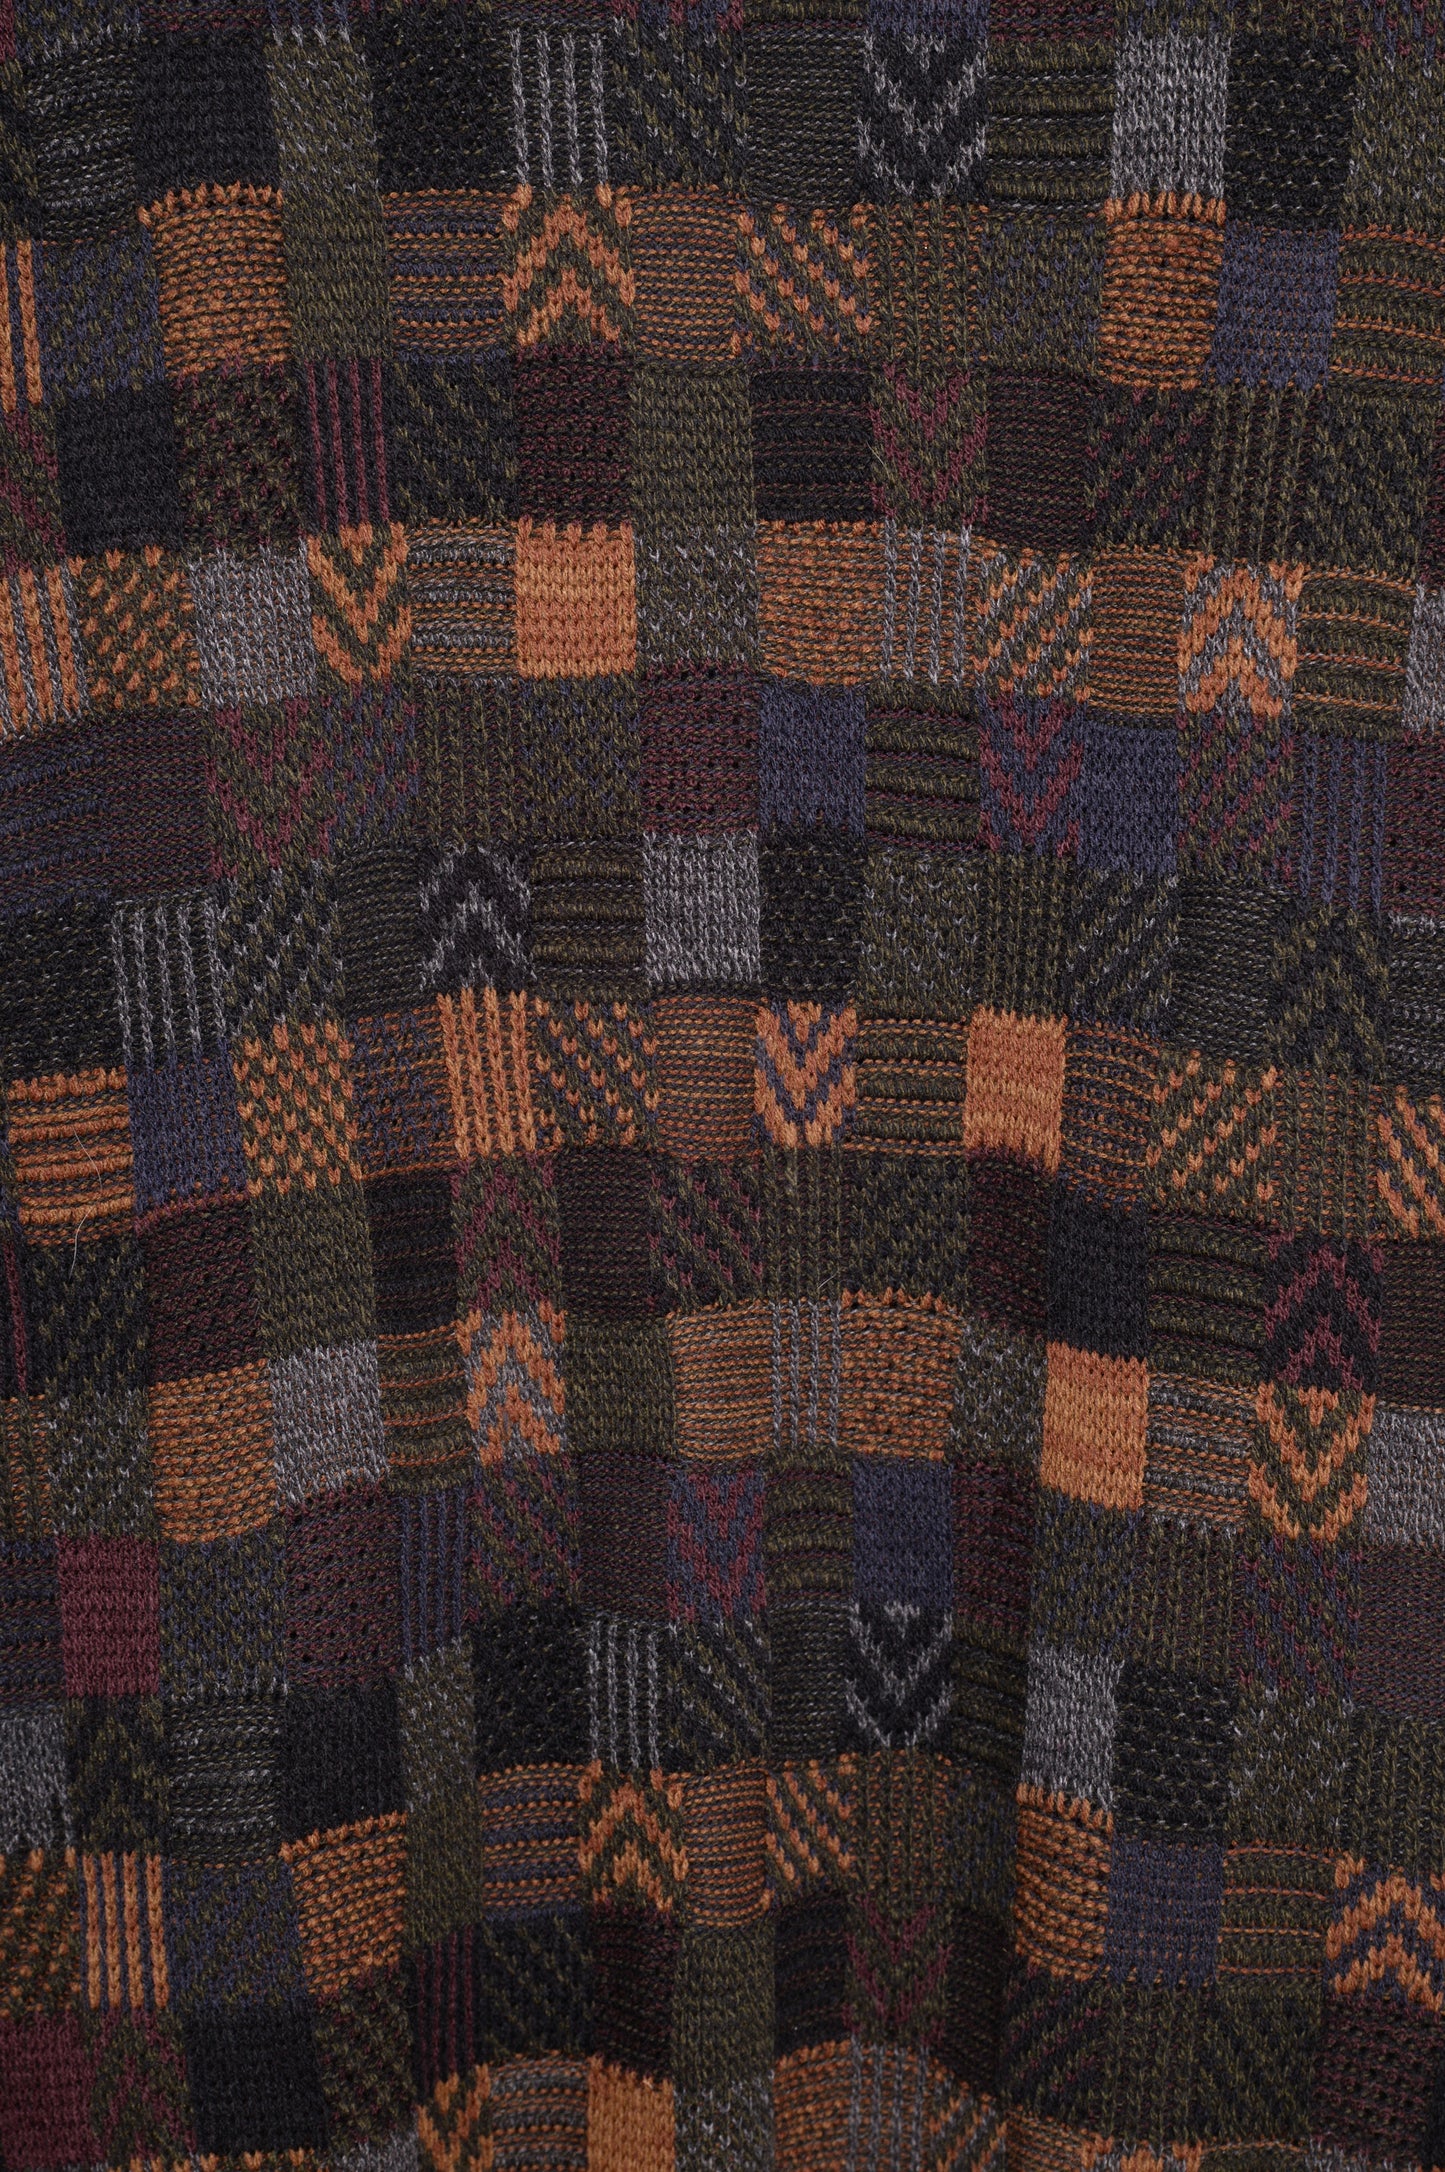 1990s Squares Sweater